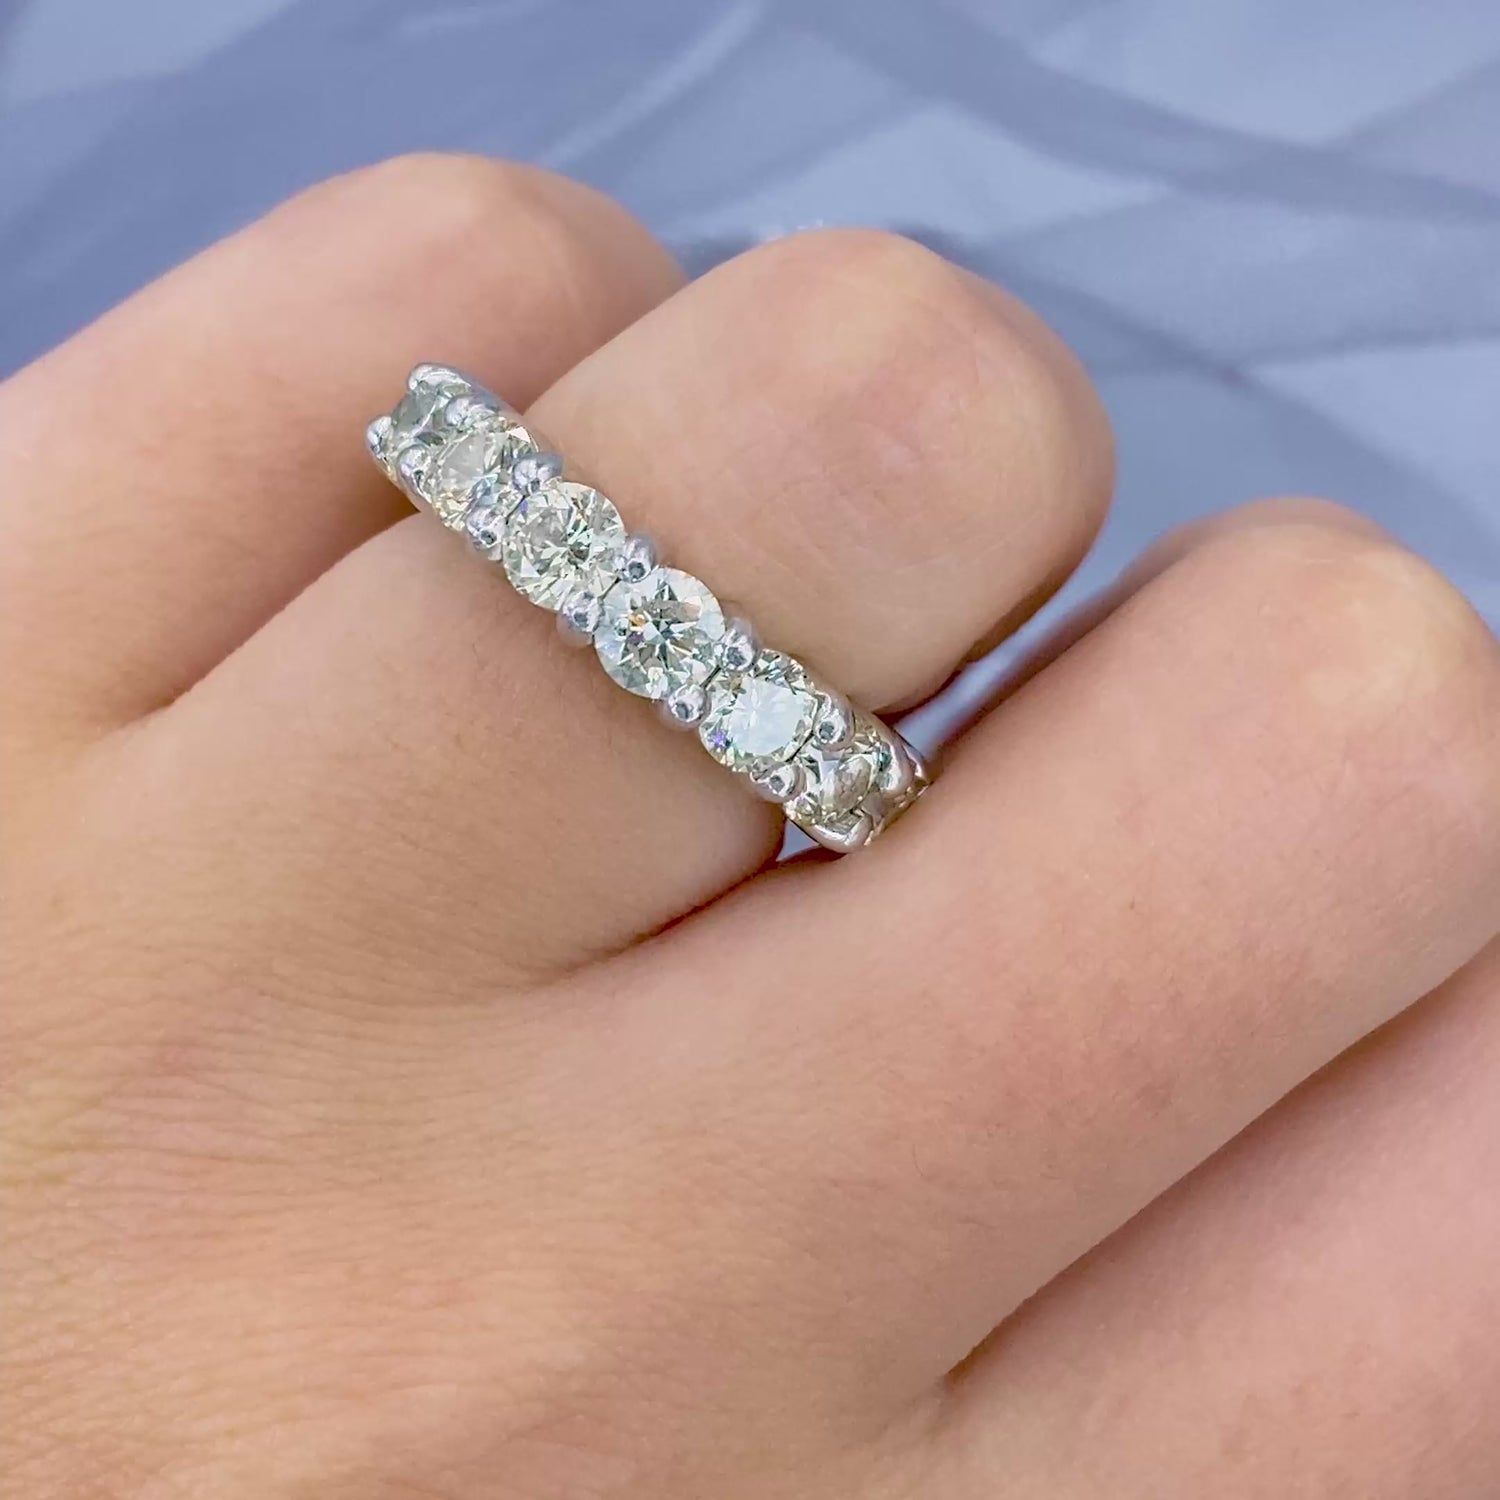 Certified 5.80CT Round Cut Diamond Eternity Ring in Platinum - Eternity Ring